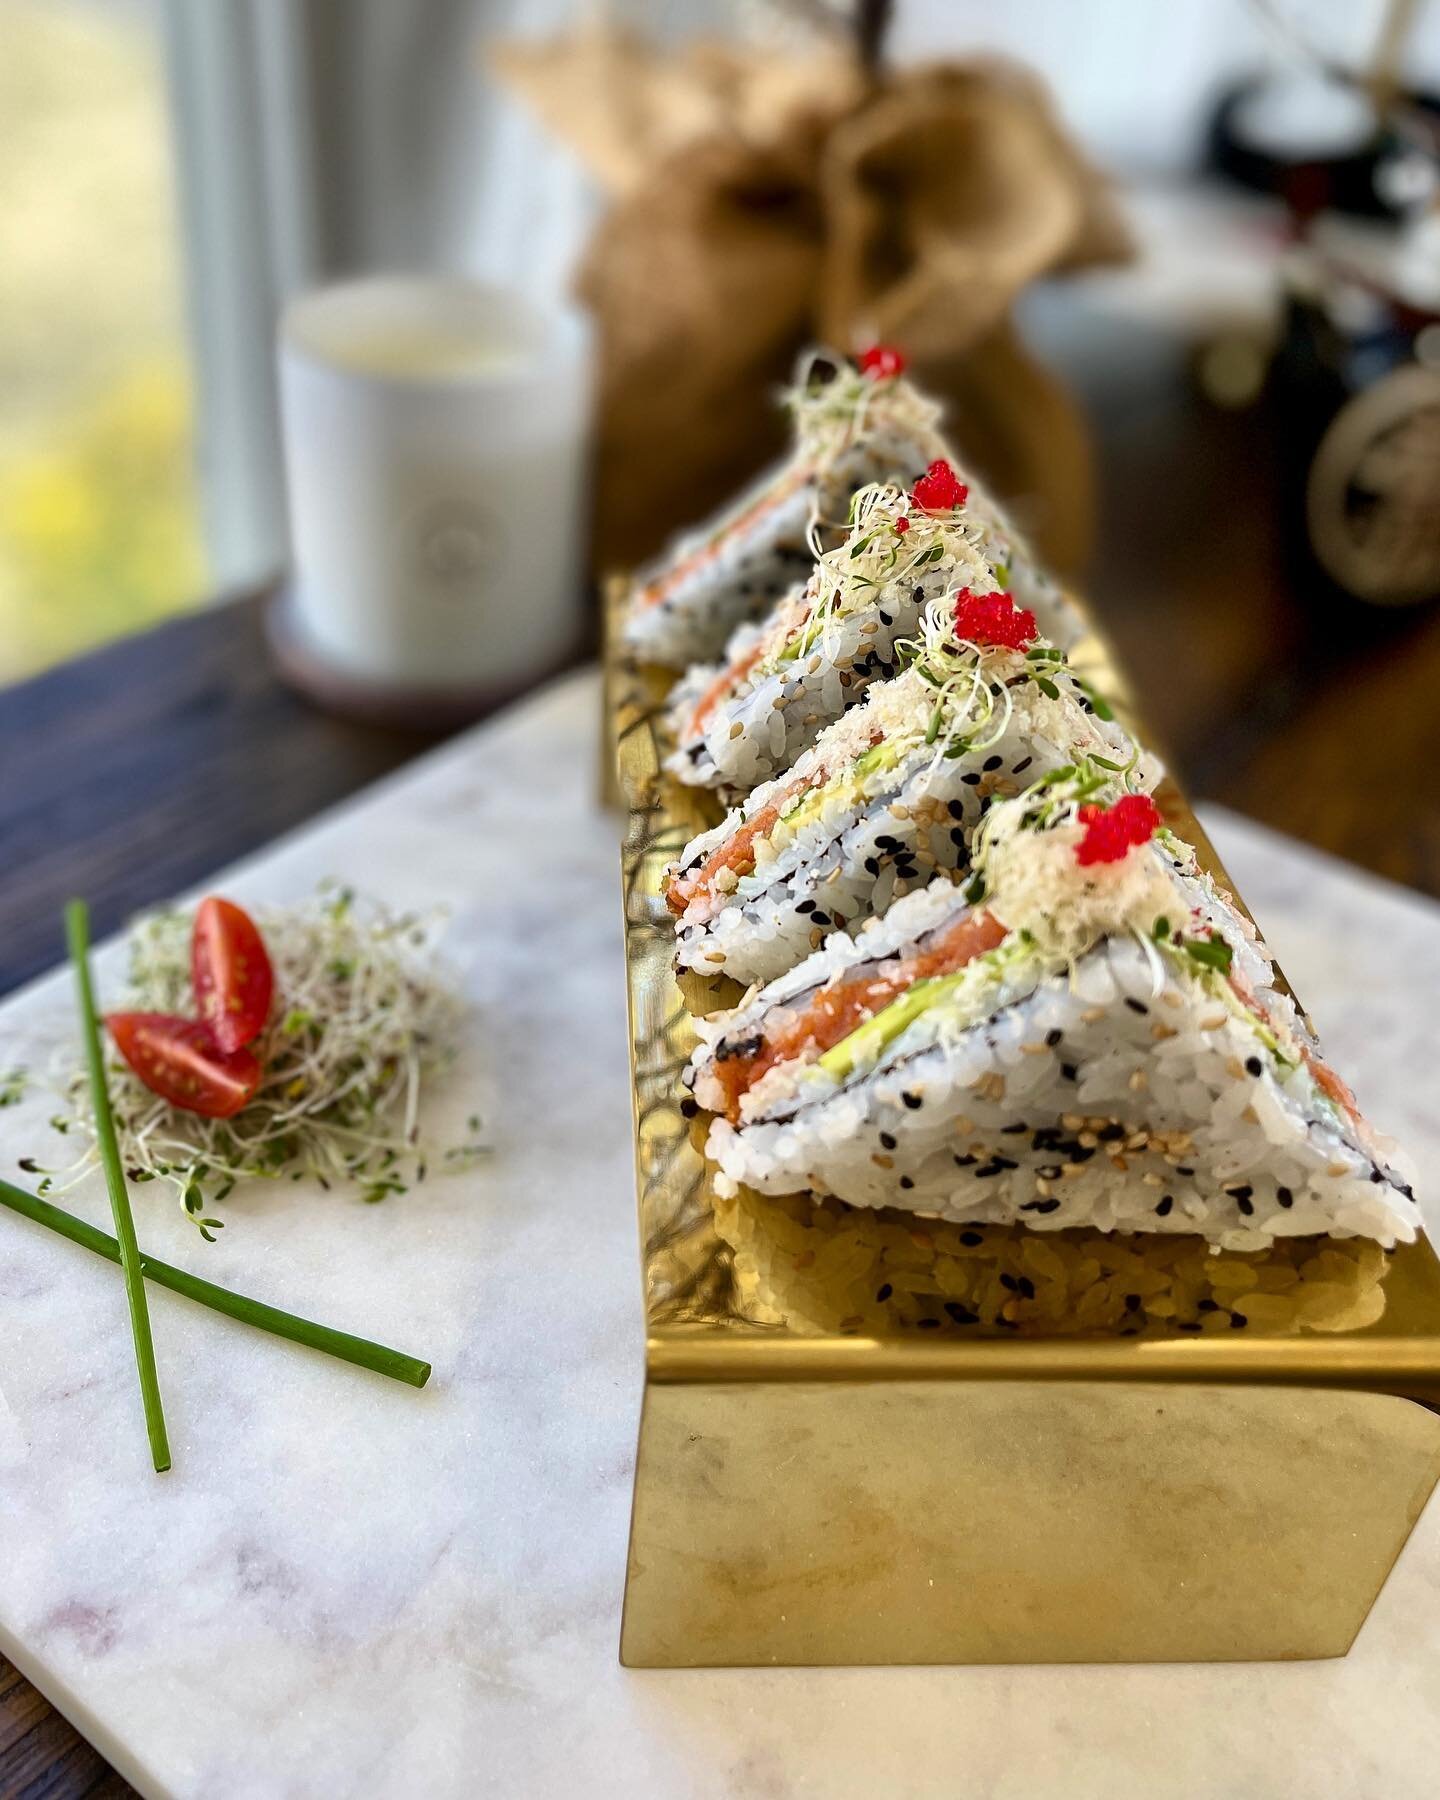 ✨Spicy tuna onigirazu🍙🍘✨ #sushisandwich #tooprettytoeat #sushiart #sushilovers #sushichef #cheflife #sushicatering #nyc #nj #foodinsta #foodstagram